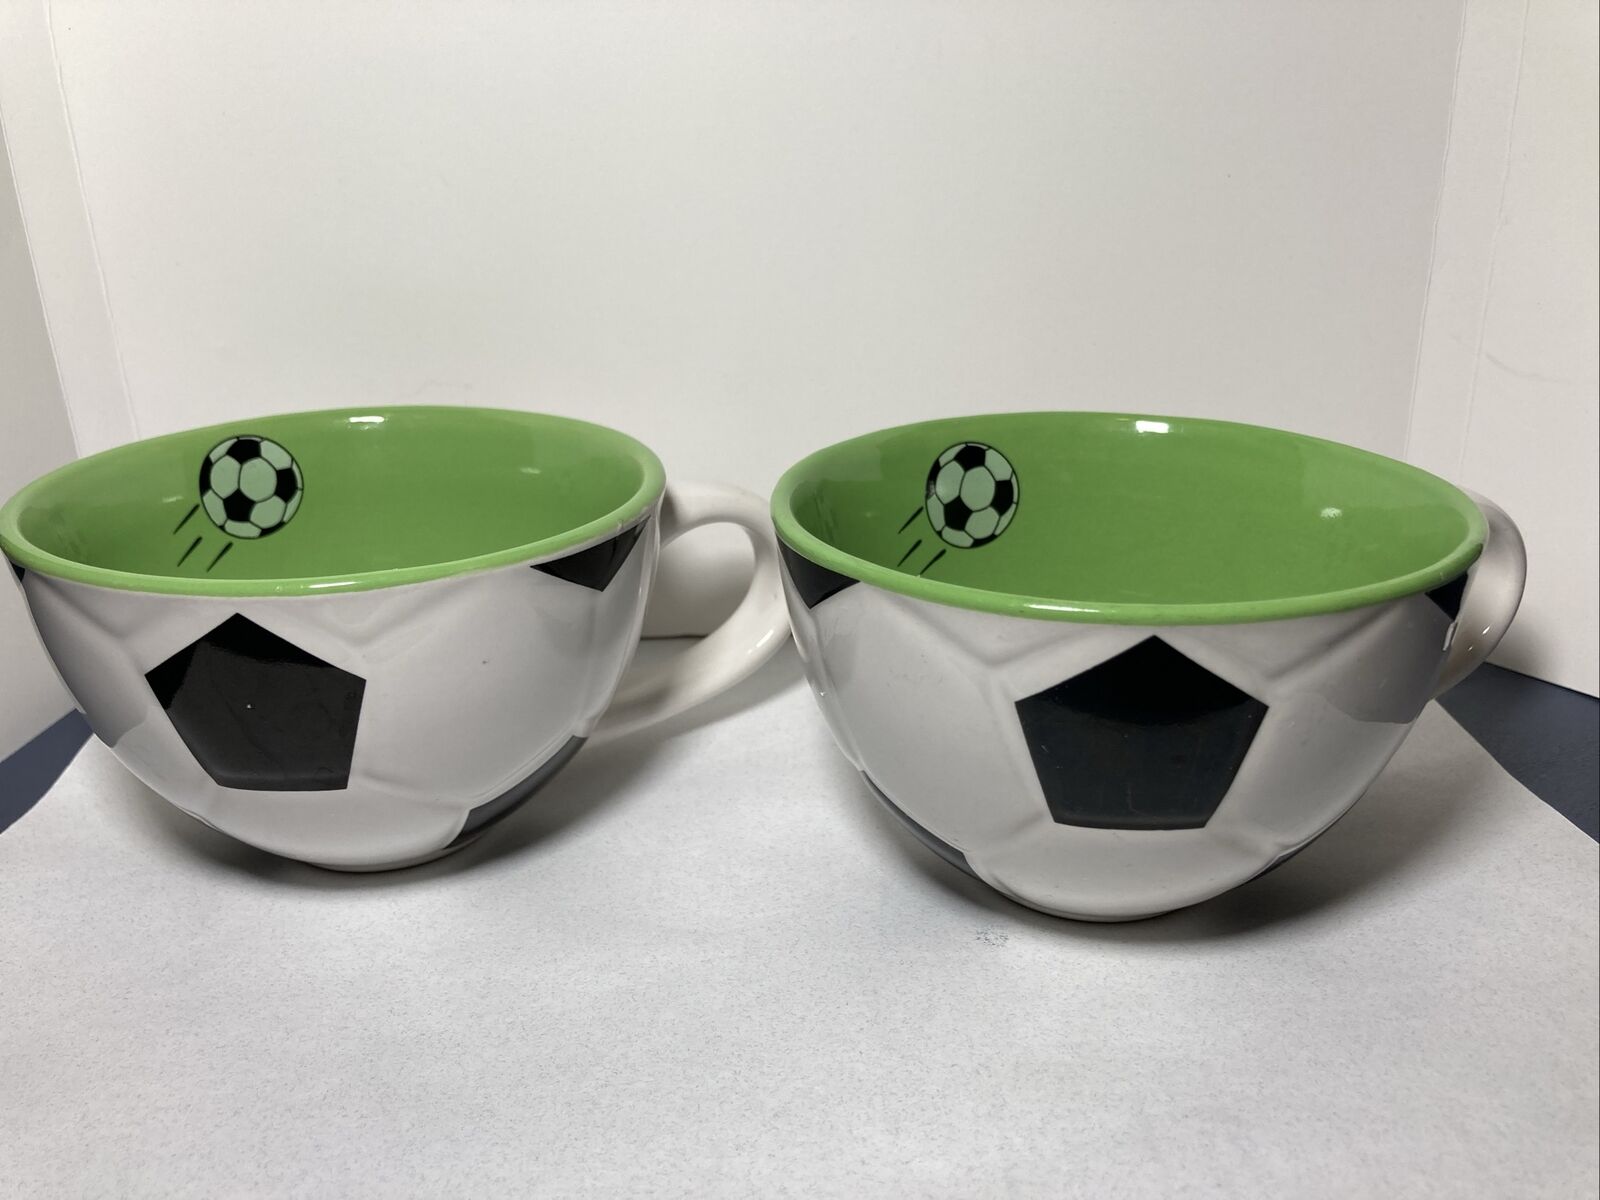 Mulberry Home Soccer Ball Field Coffee Mug Cup Tea Green Inside with Soccer Ball